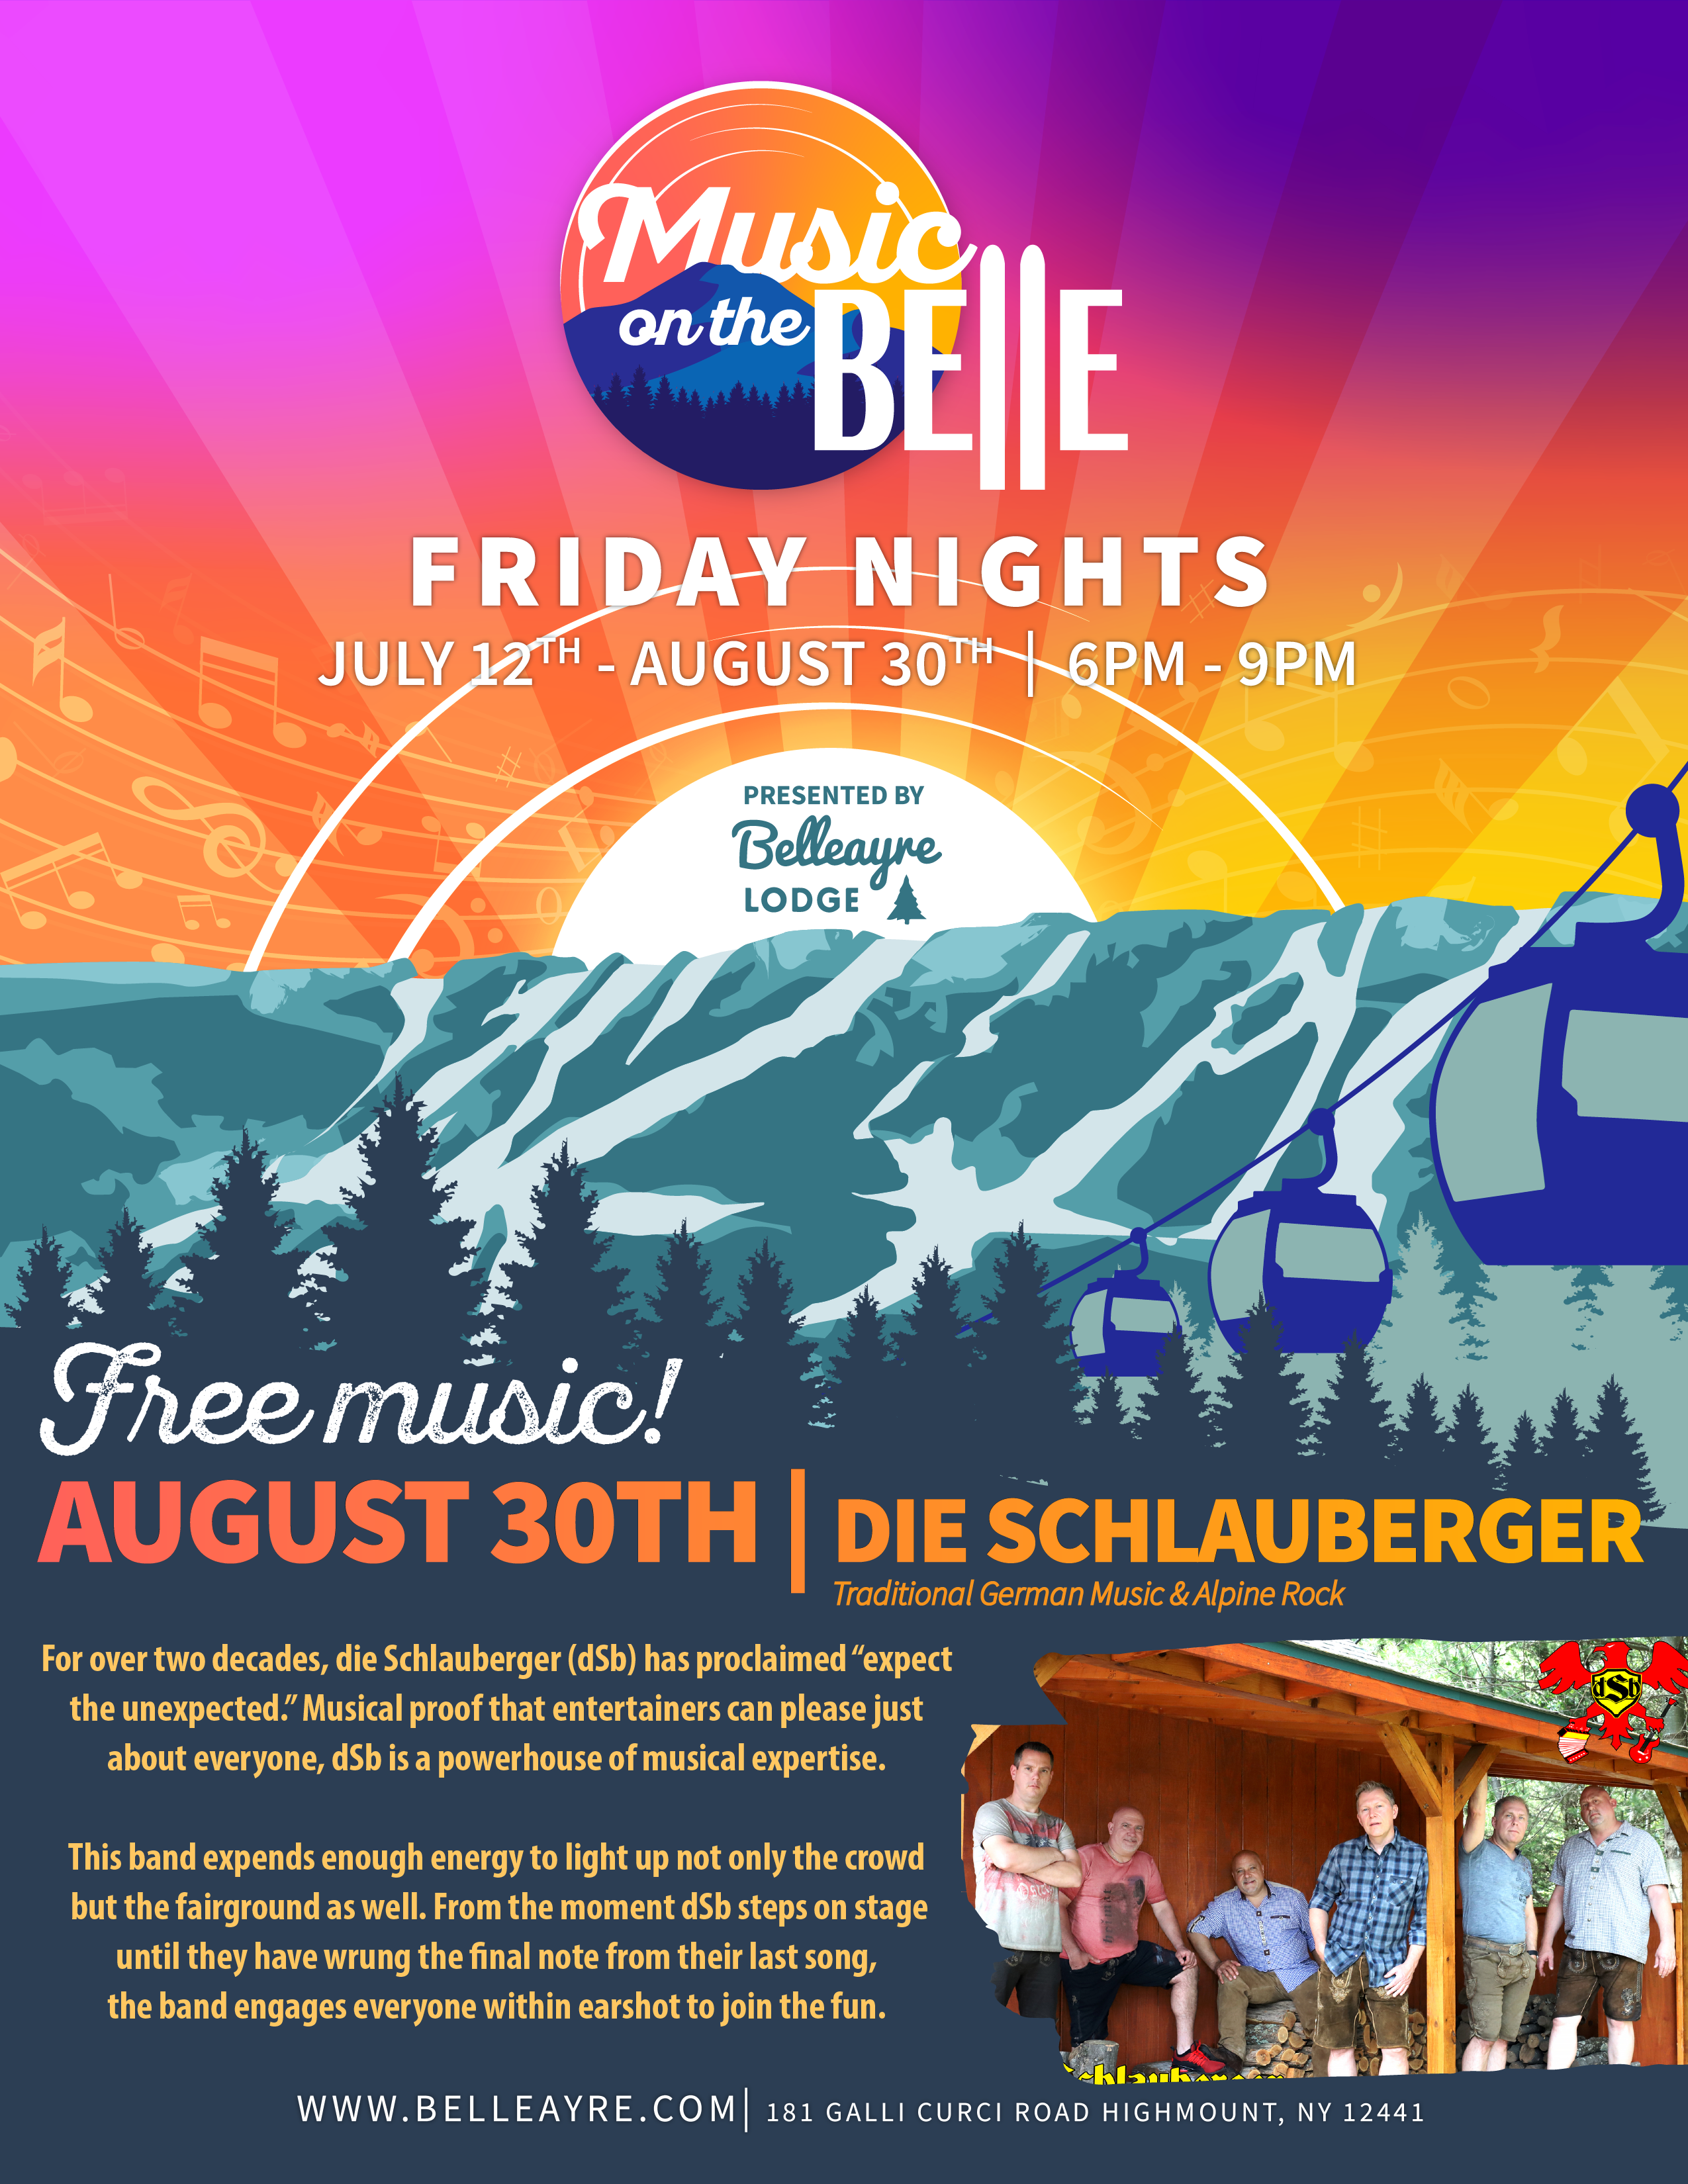 Die Schlauberger Music on the belle friday nights flyer August 30th